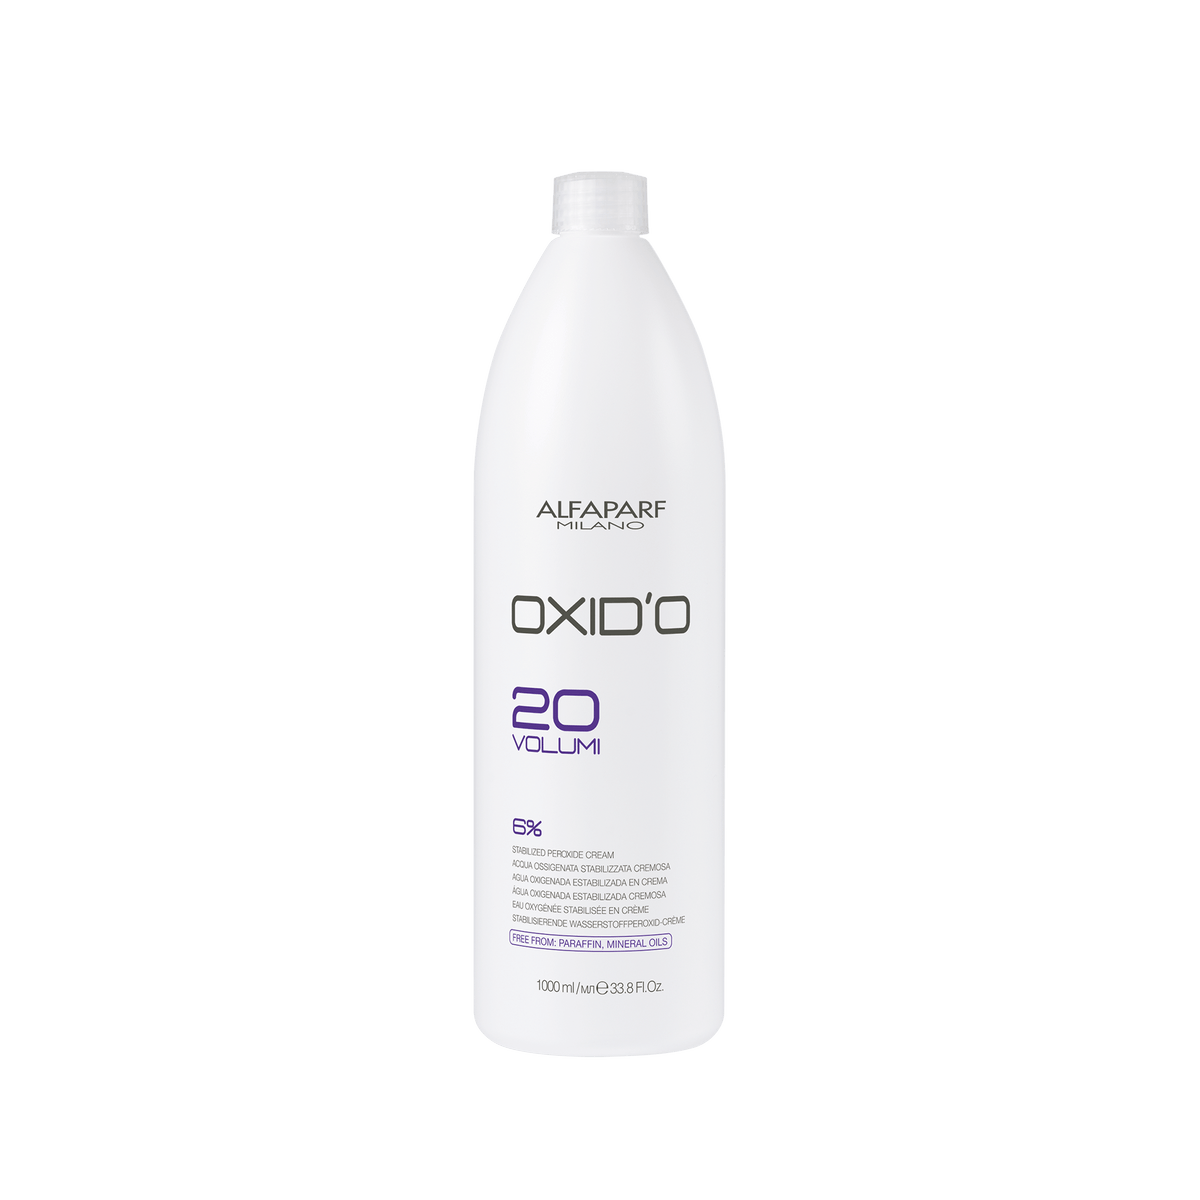 ALFAPARF OXID'O Stabilized Peroxide Cream 20 Volume, 33.8oz